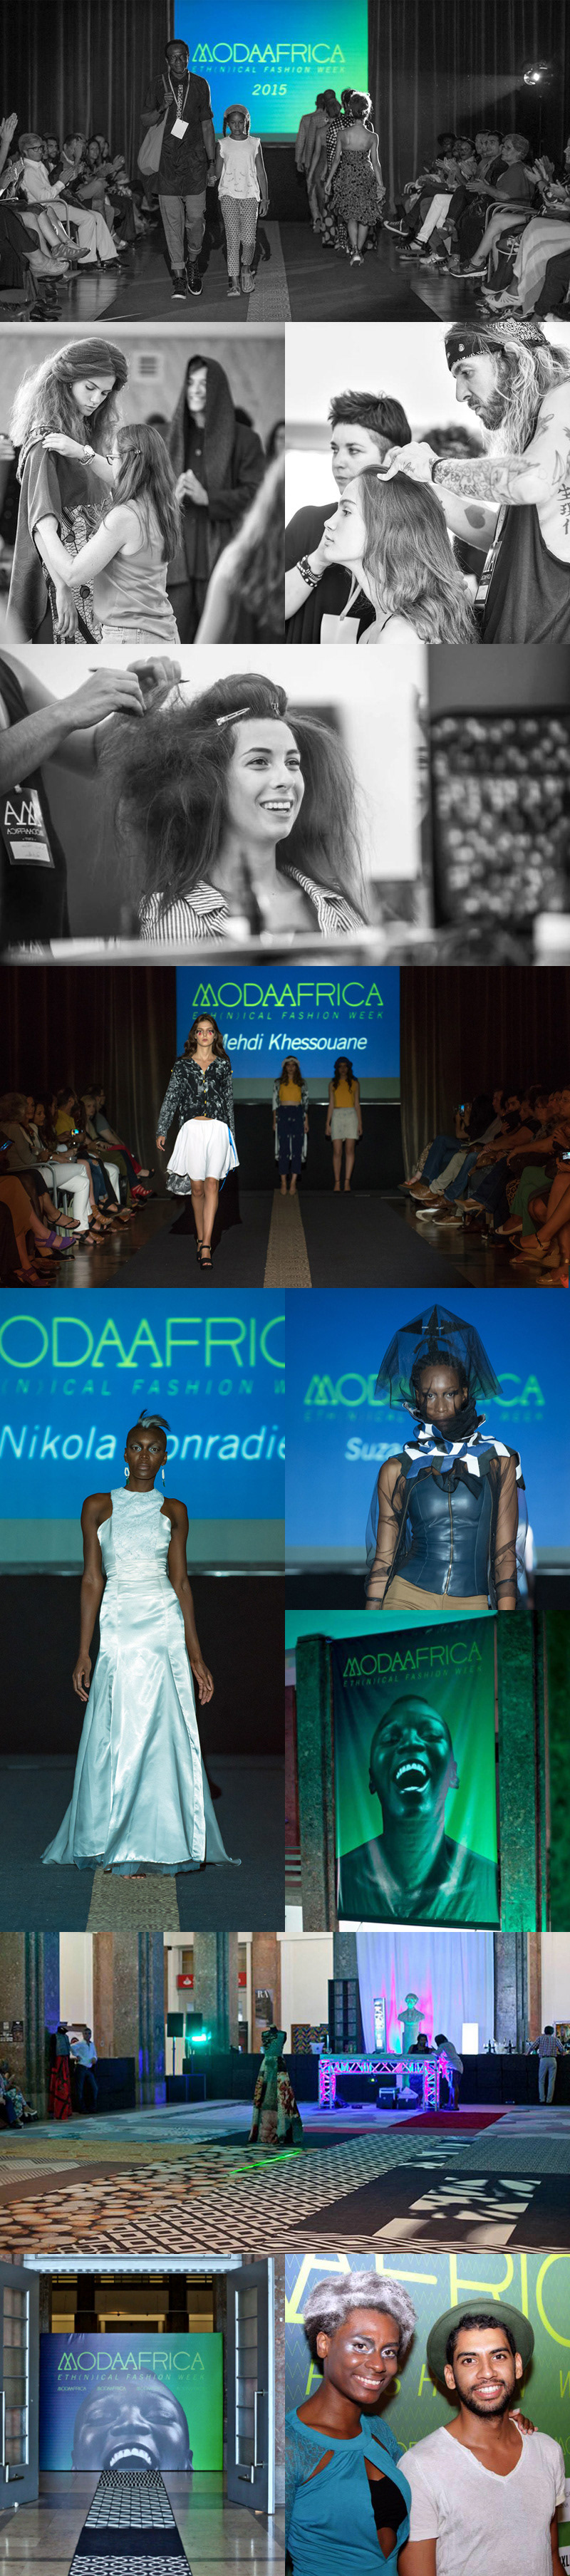 bruno roda moda Fashion  africa lisboa logo brand design